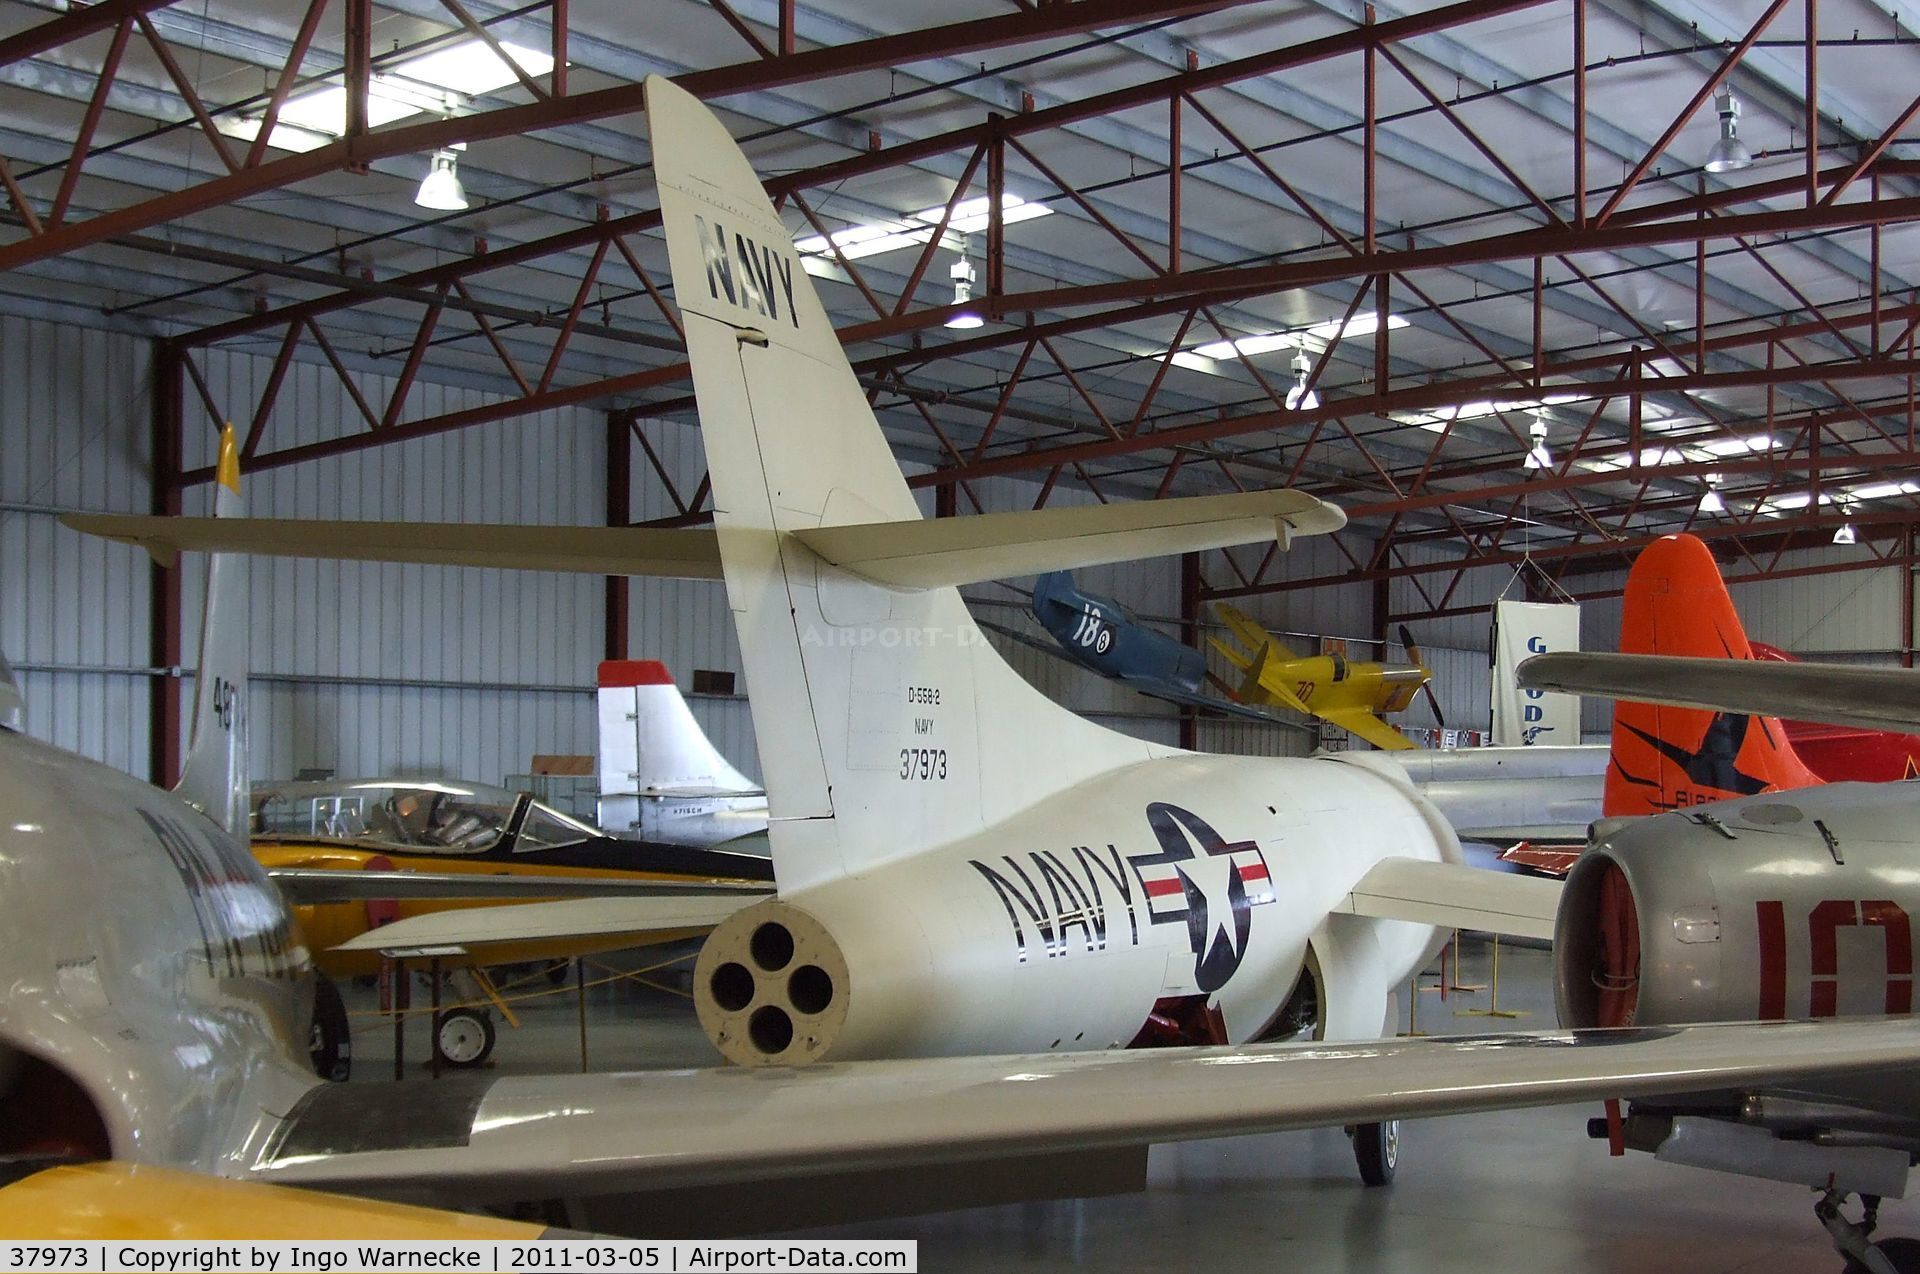 37973, Douglas D-558-2 Skyrocket C/N 6567, Douglas D-558-2 Skyrocket at the Planes of Fame Air Museum, Chino CA